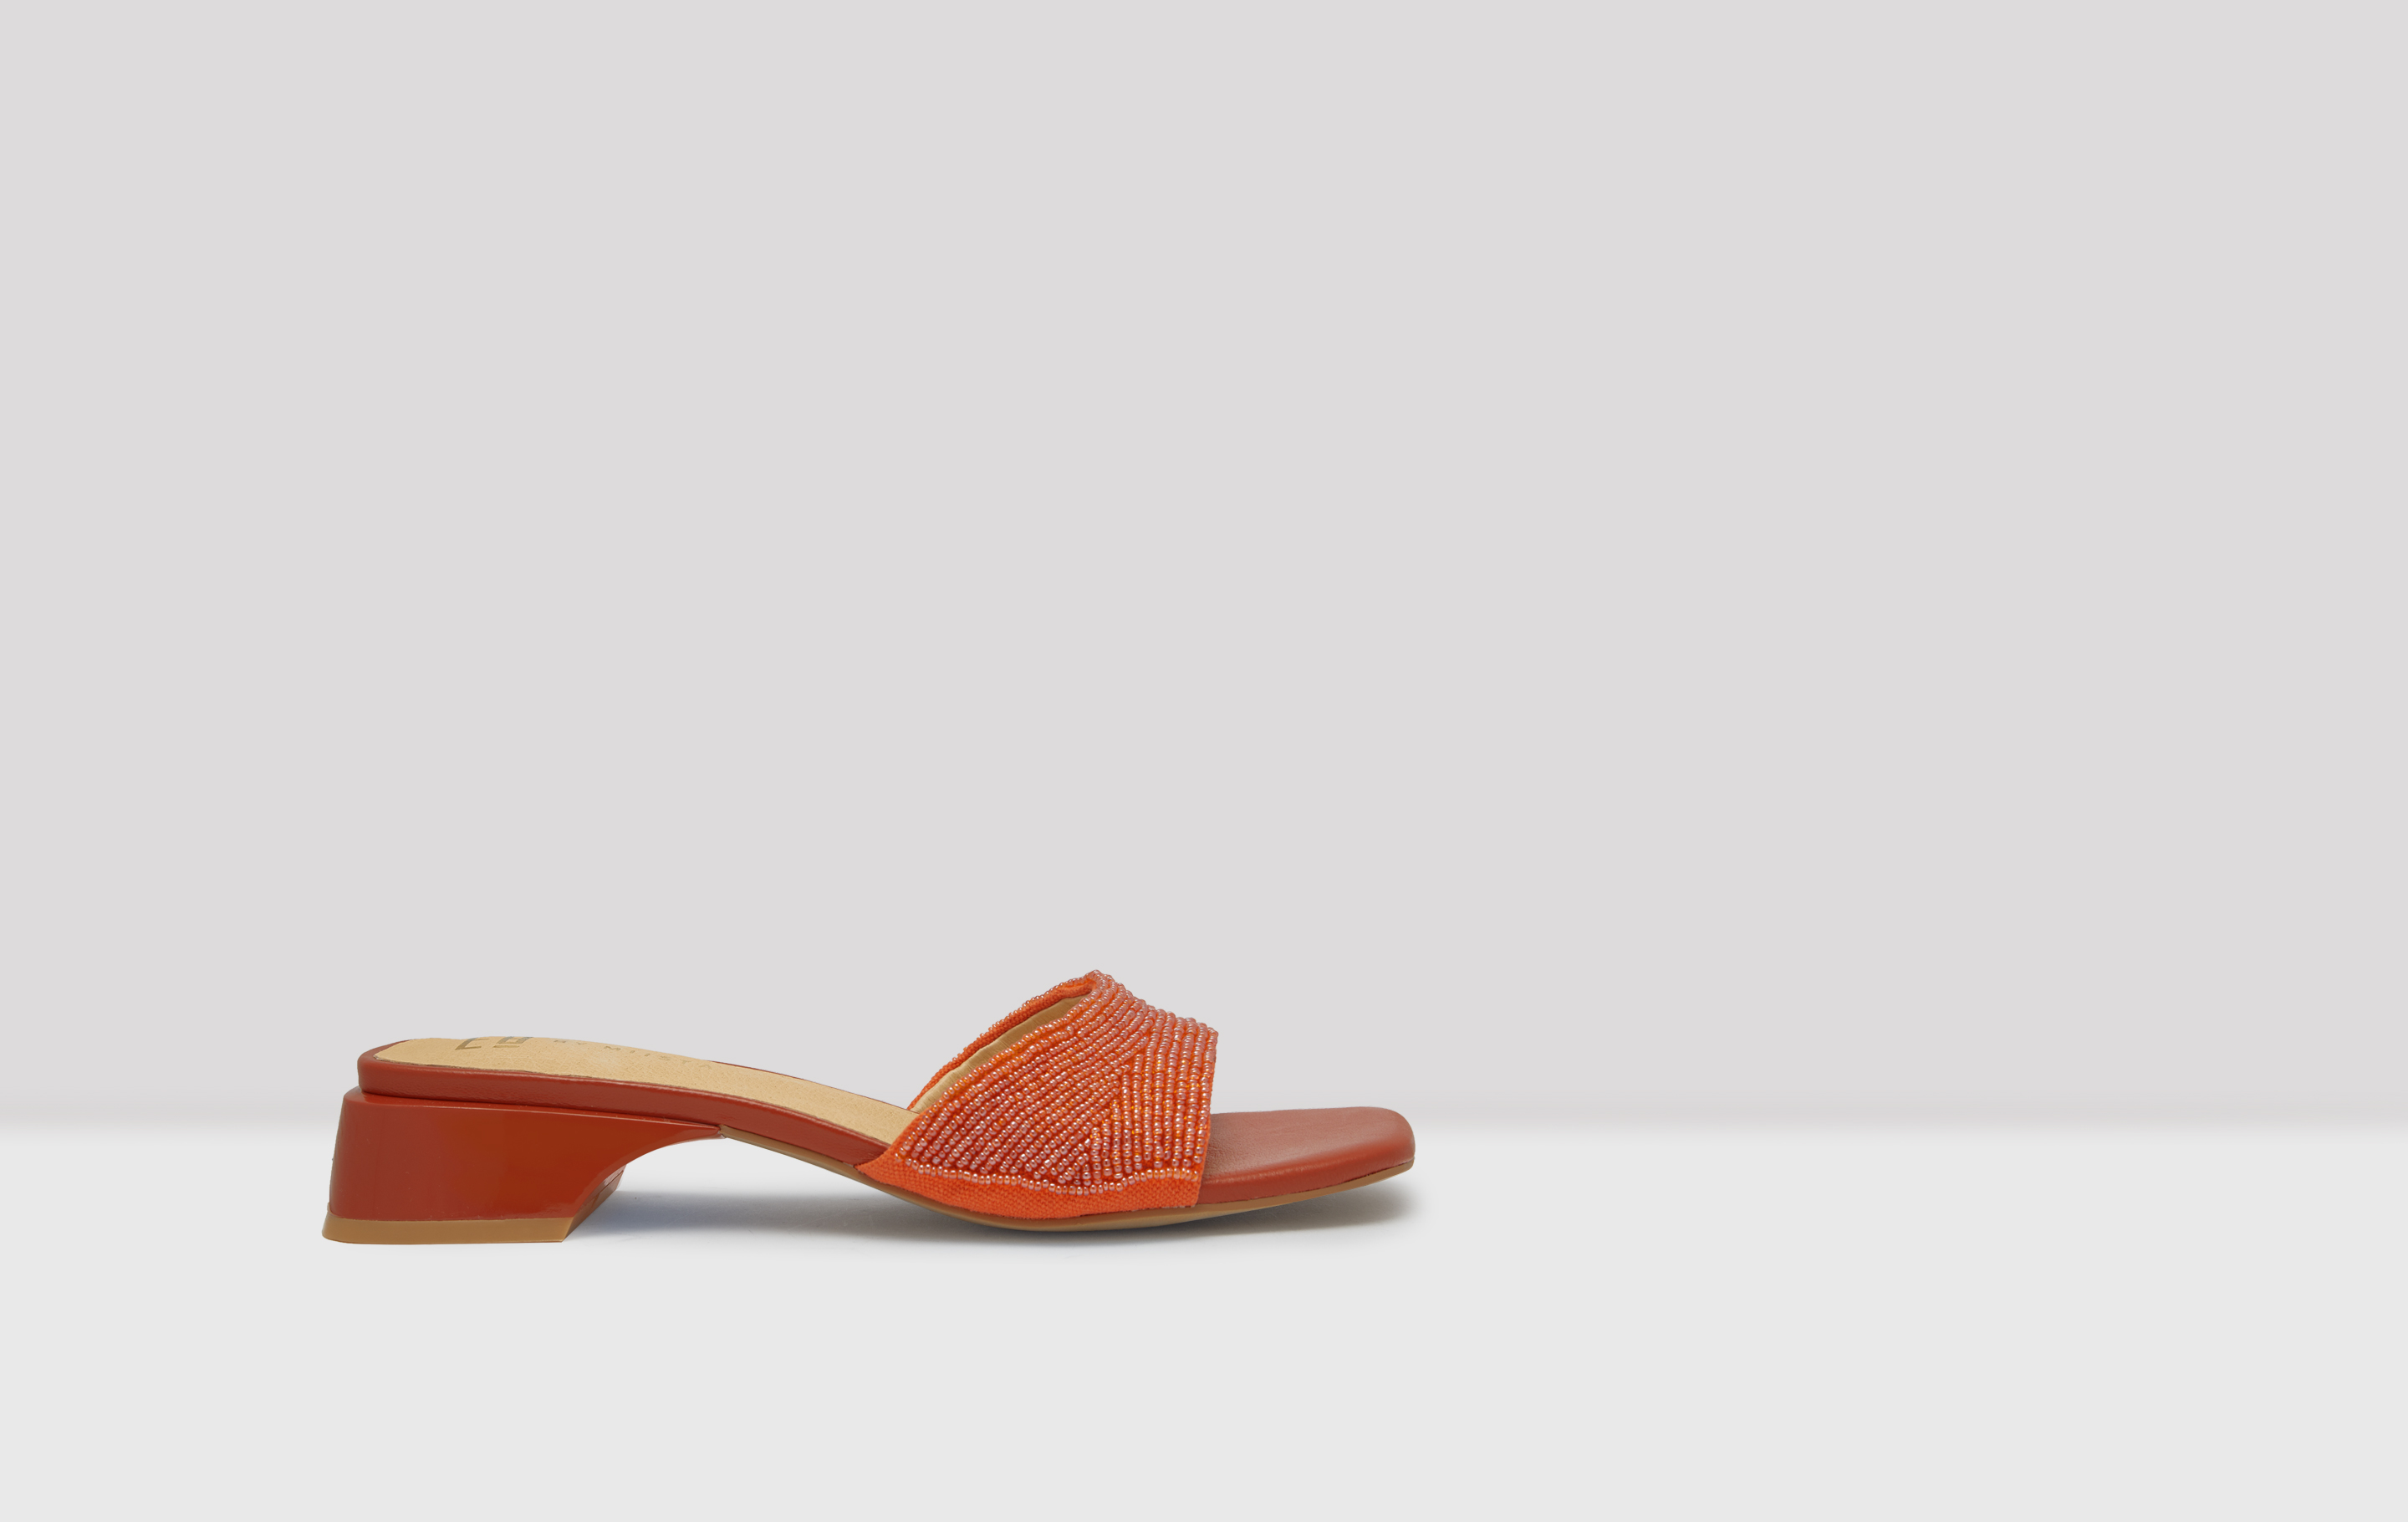 Enele Tigerlily Sandals // E8 by Miista 